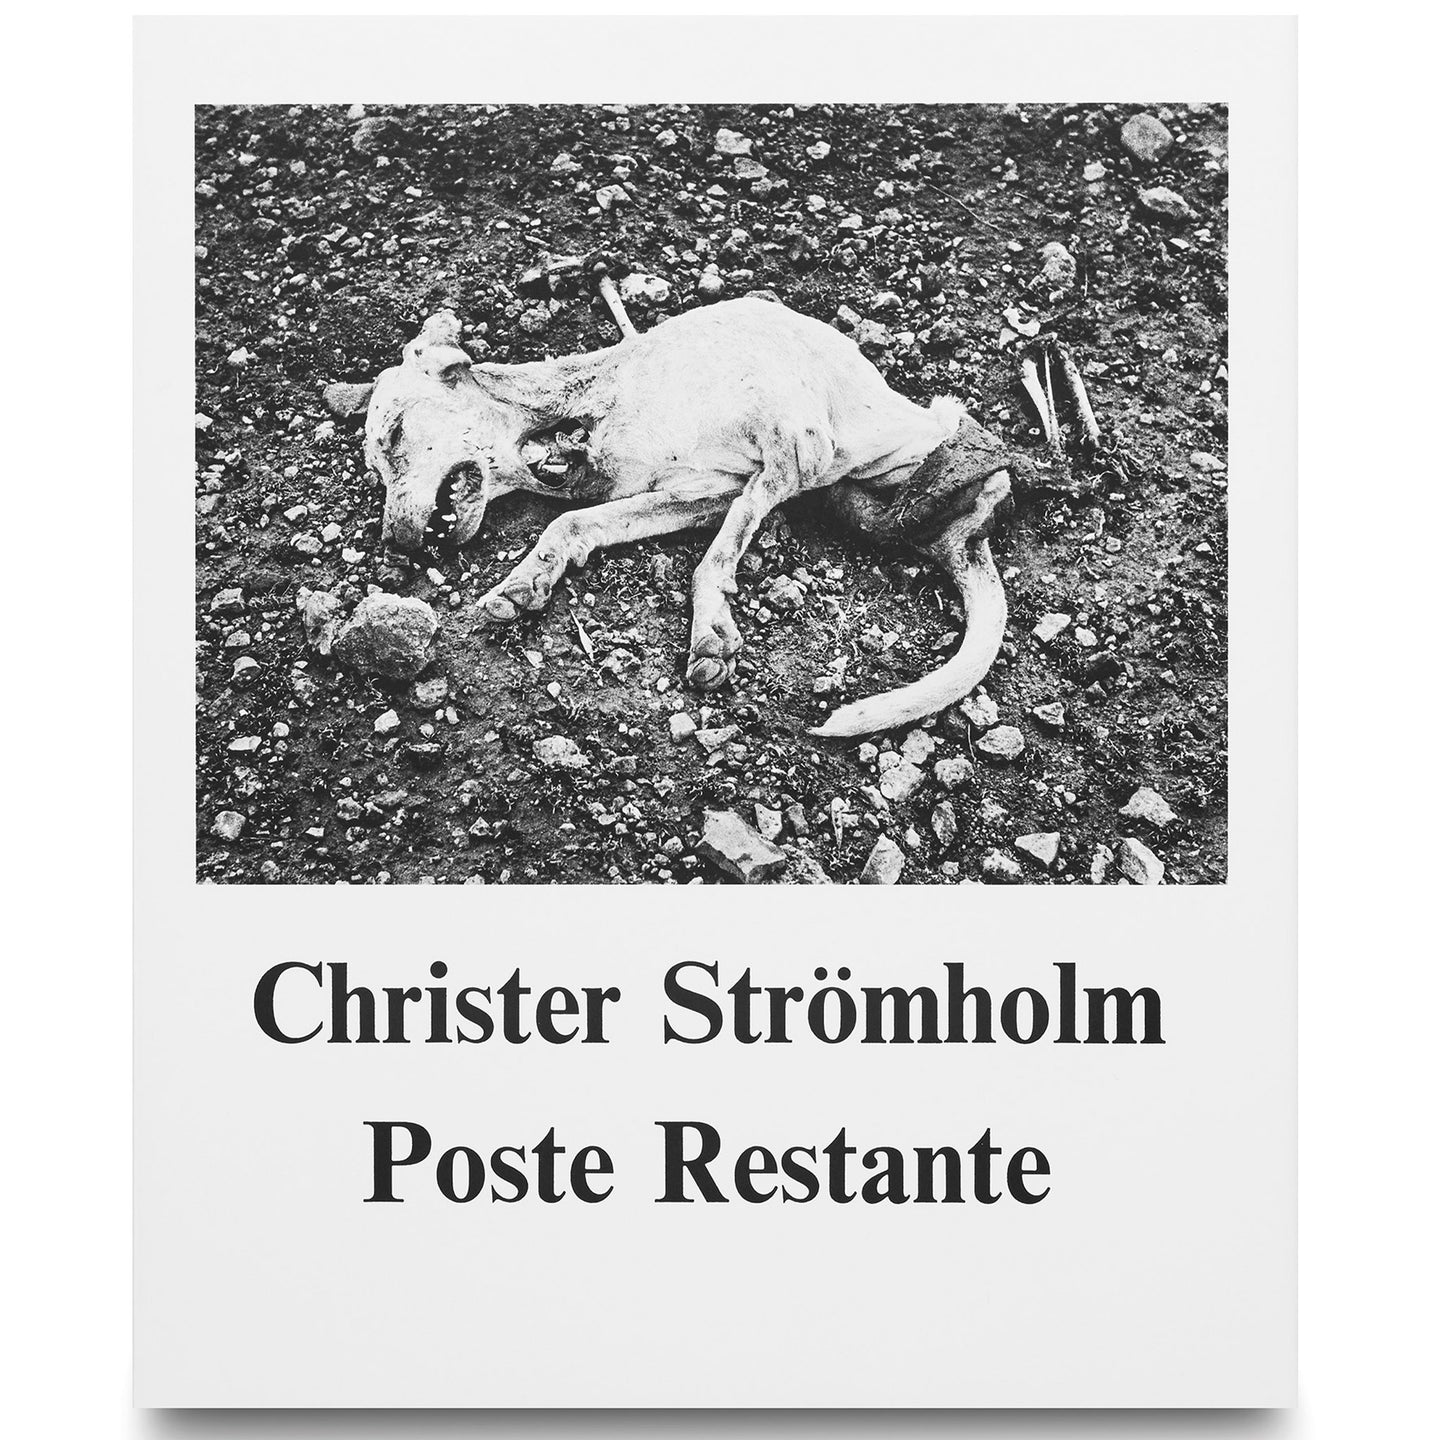 CHRISTER STRÖMHOLM: POSTE RESTANTE